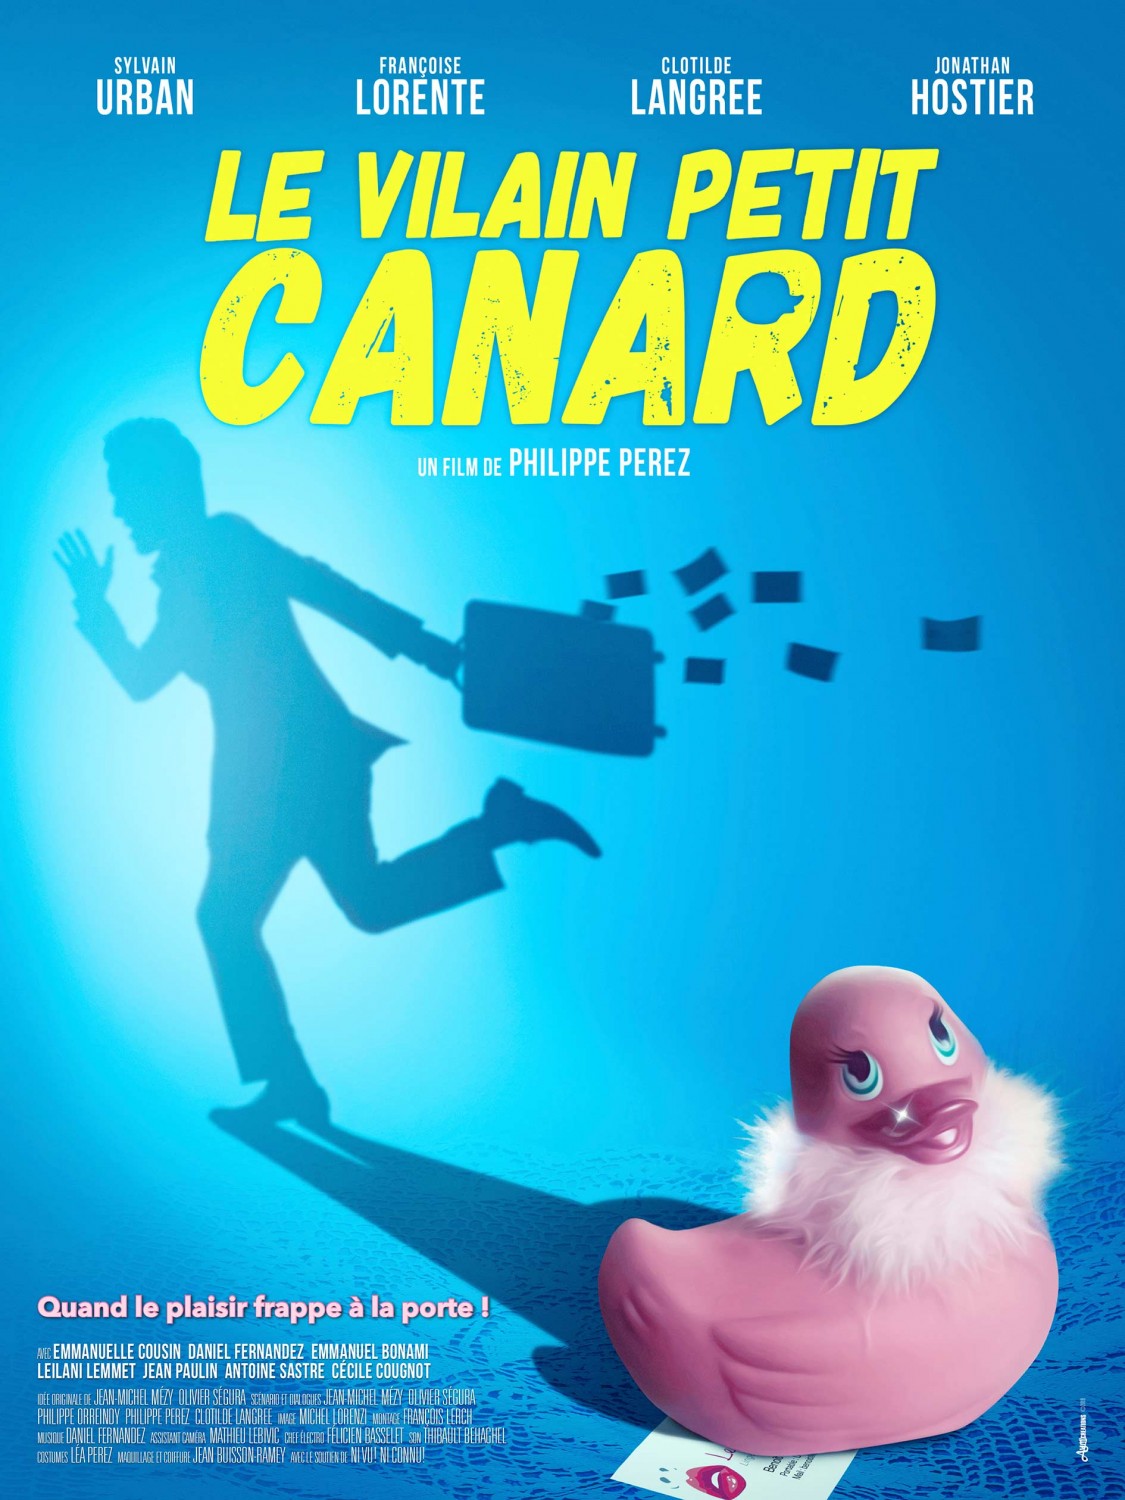 Extra Large Movie Poster Image for Le vilain petit canard